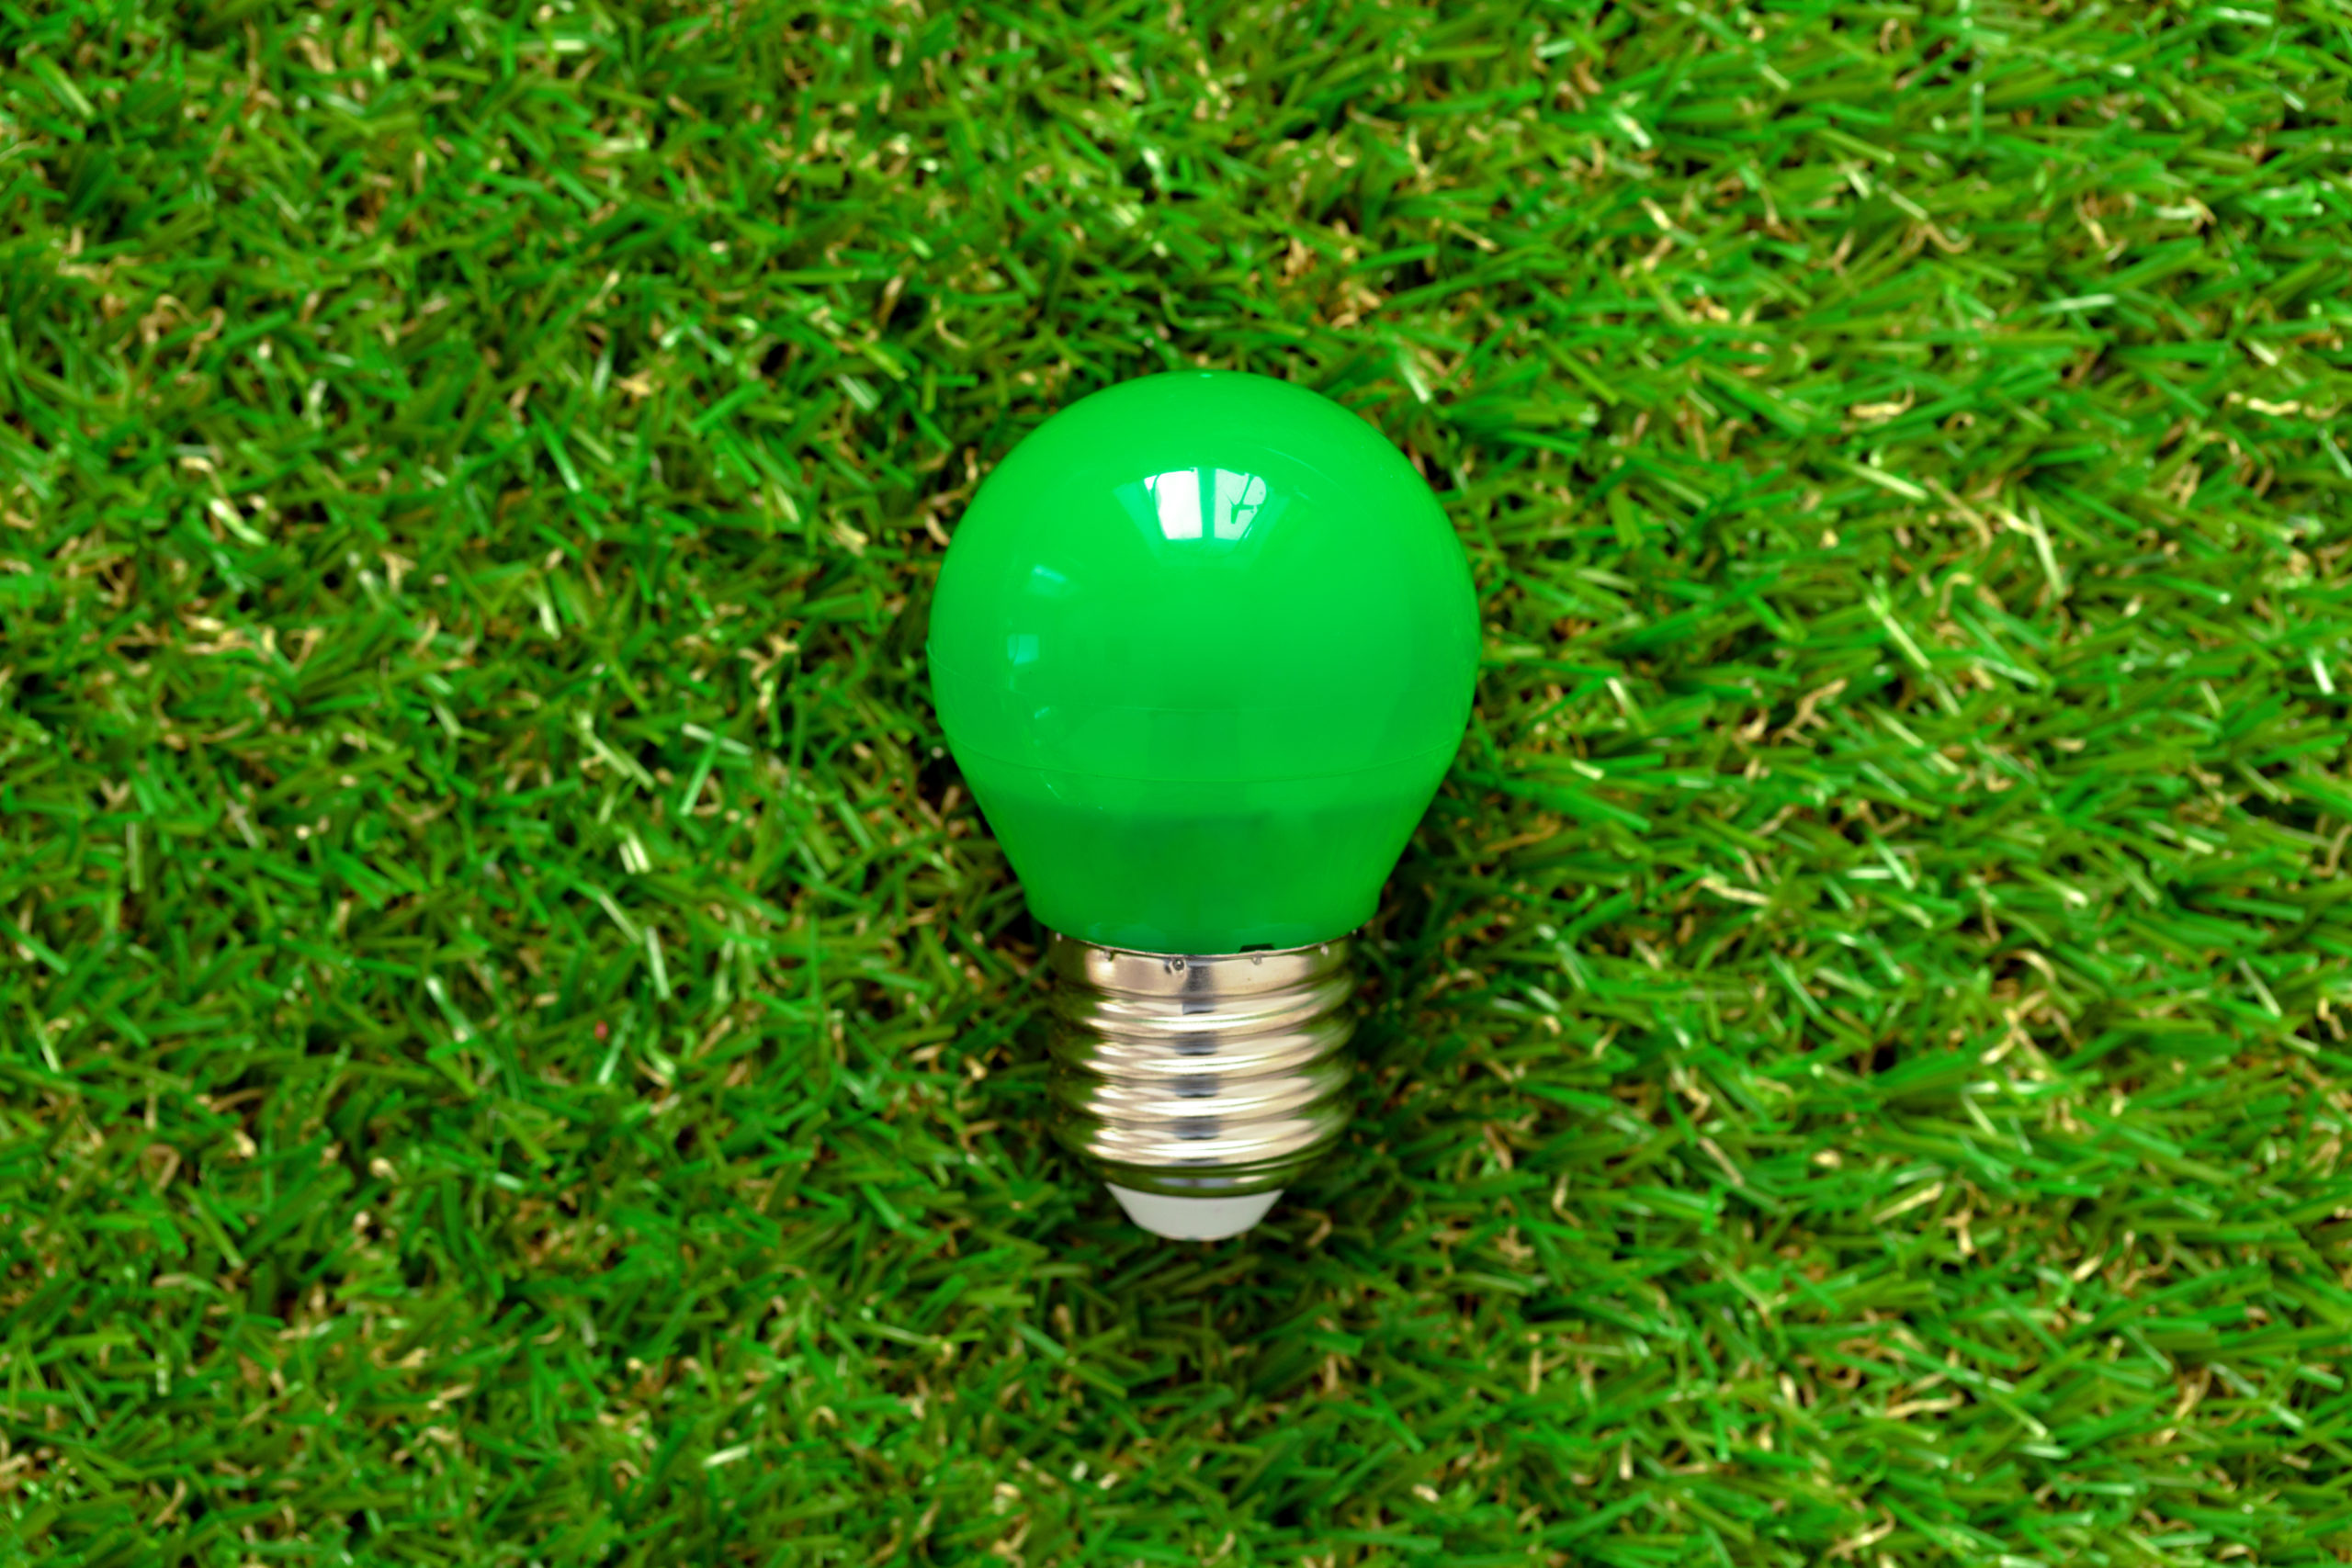 Green lightbulb on green grass to represent energy efficiency